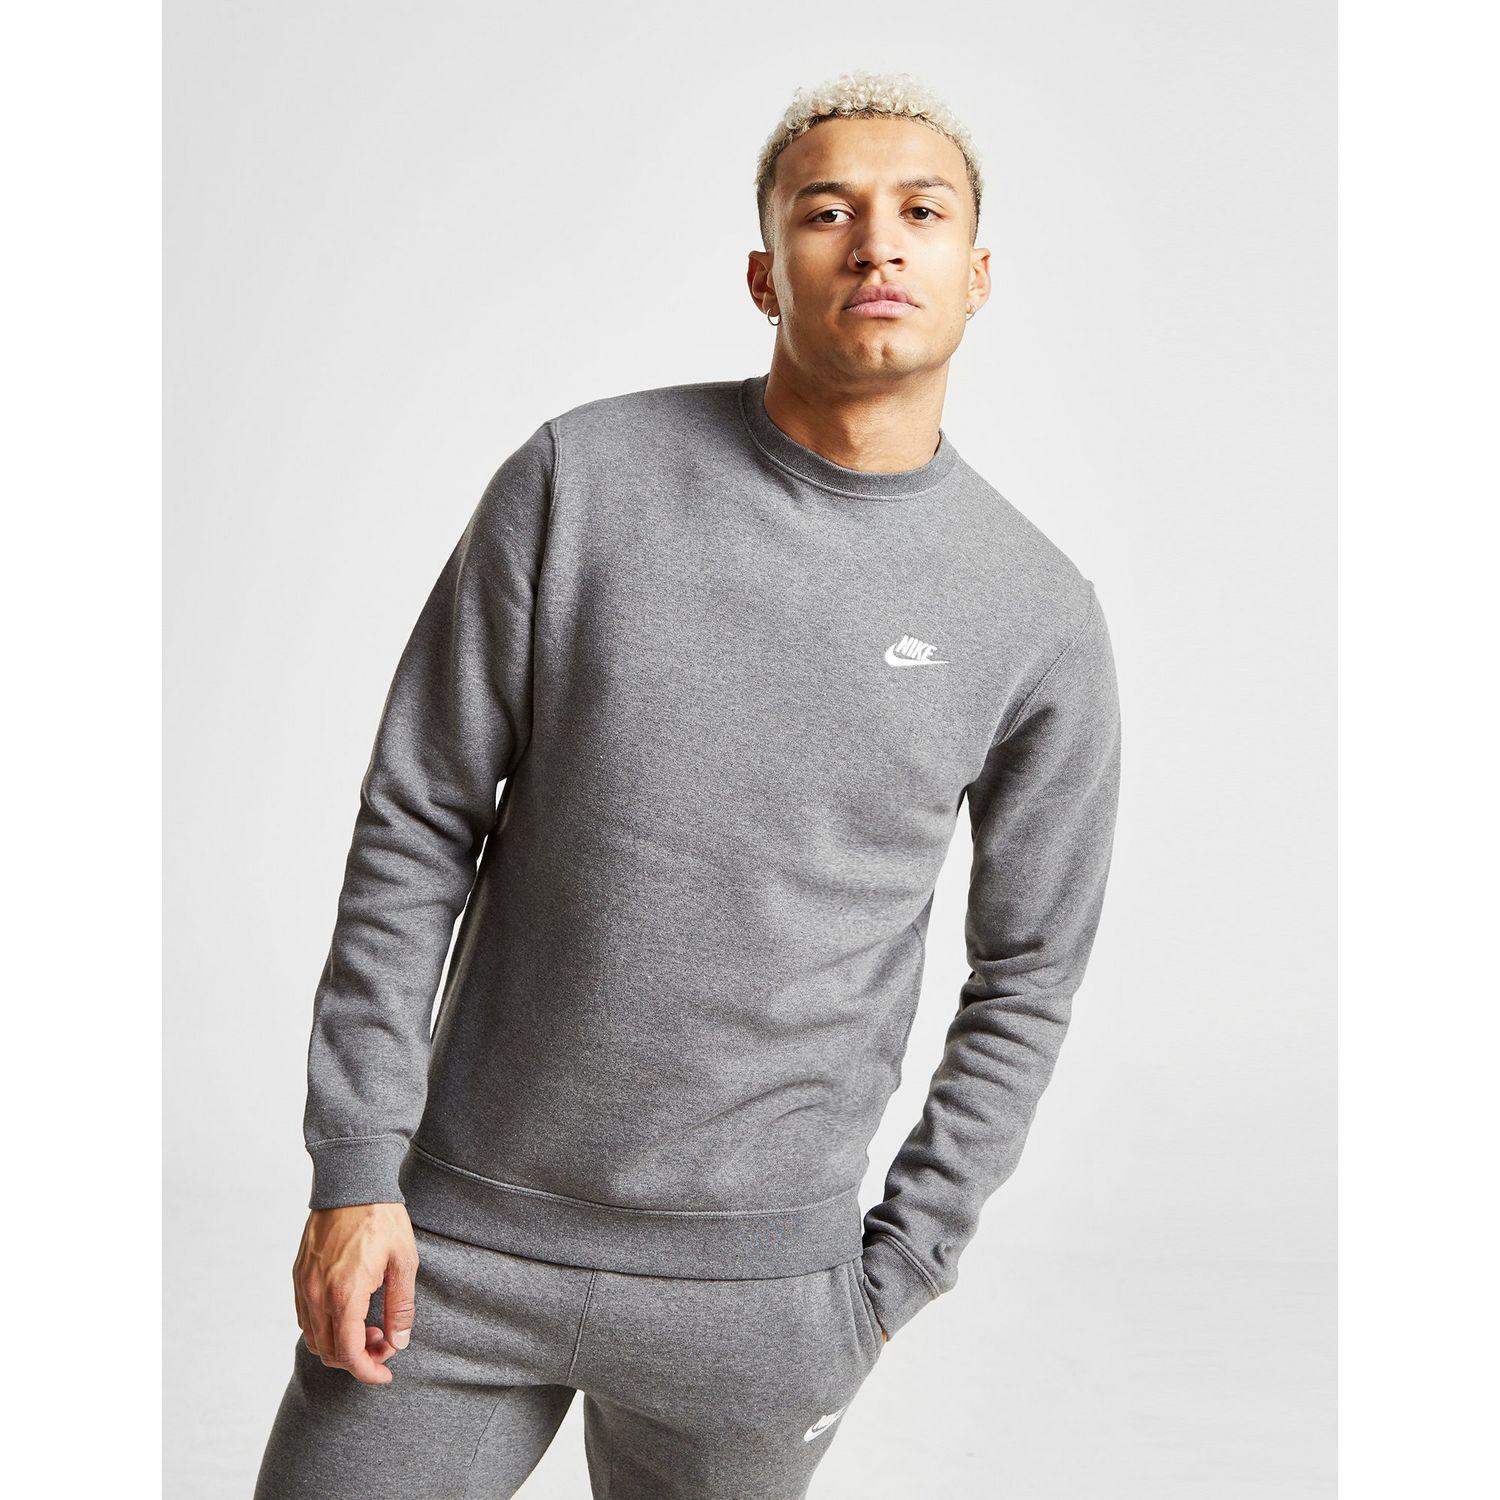 Nike Cotton Foundation Crew Sweatshirt in Grey (Grey) for Men - Lyst